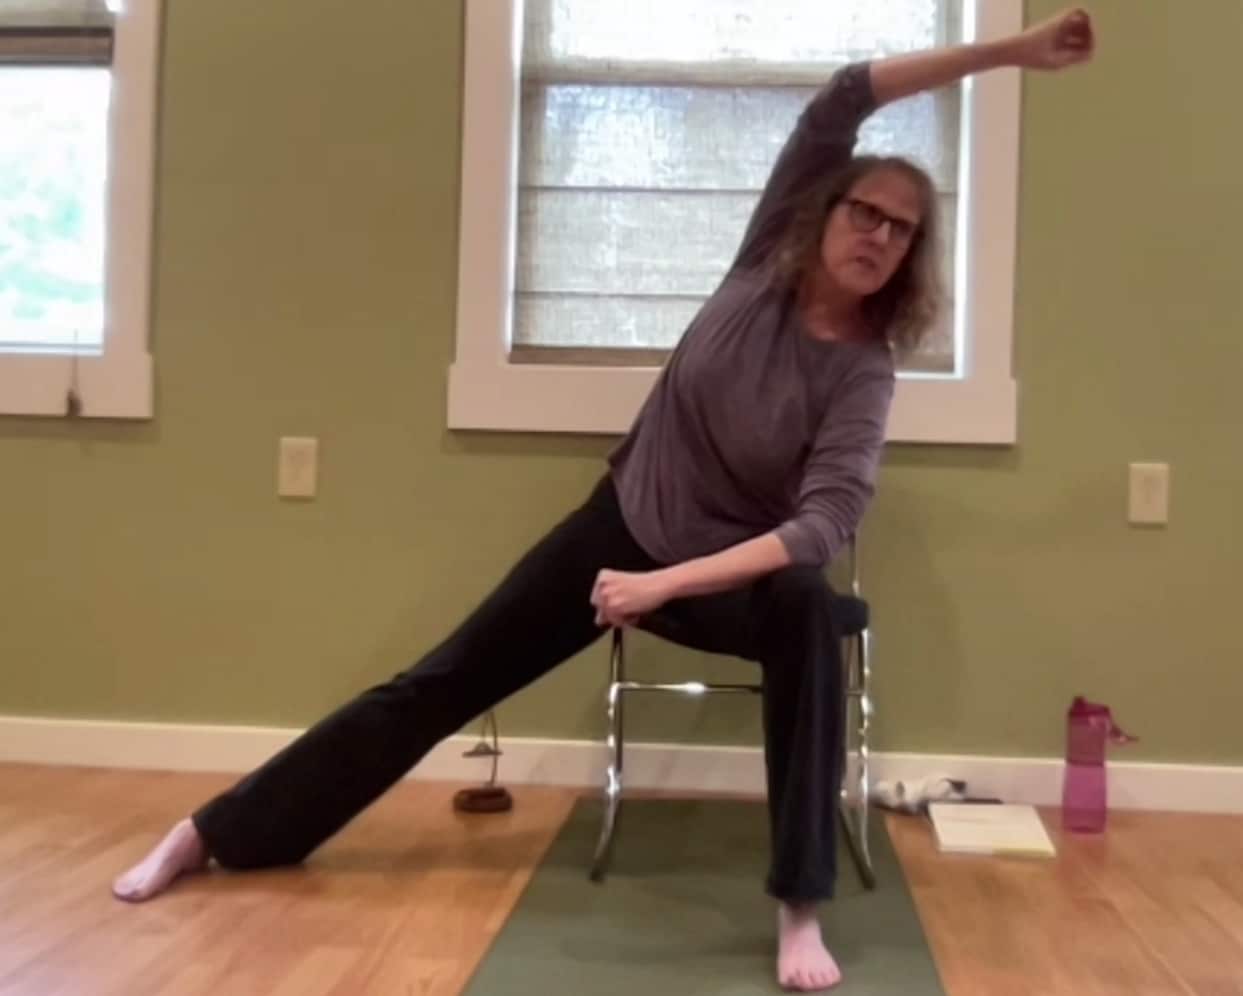 Chair Yoga - Yoga For Seniors